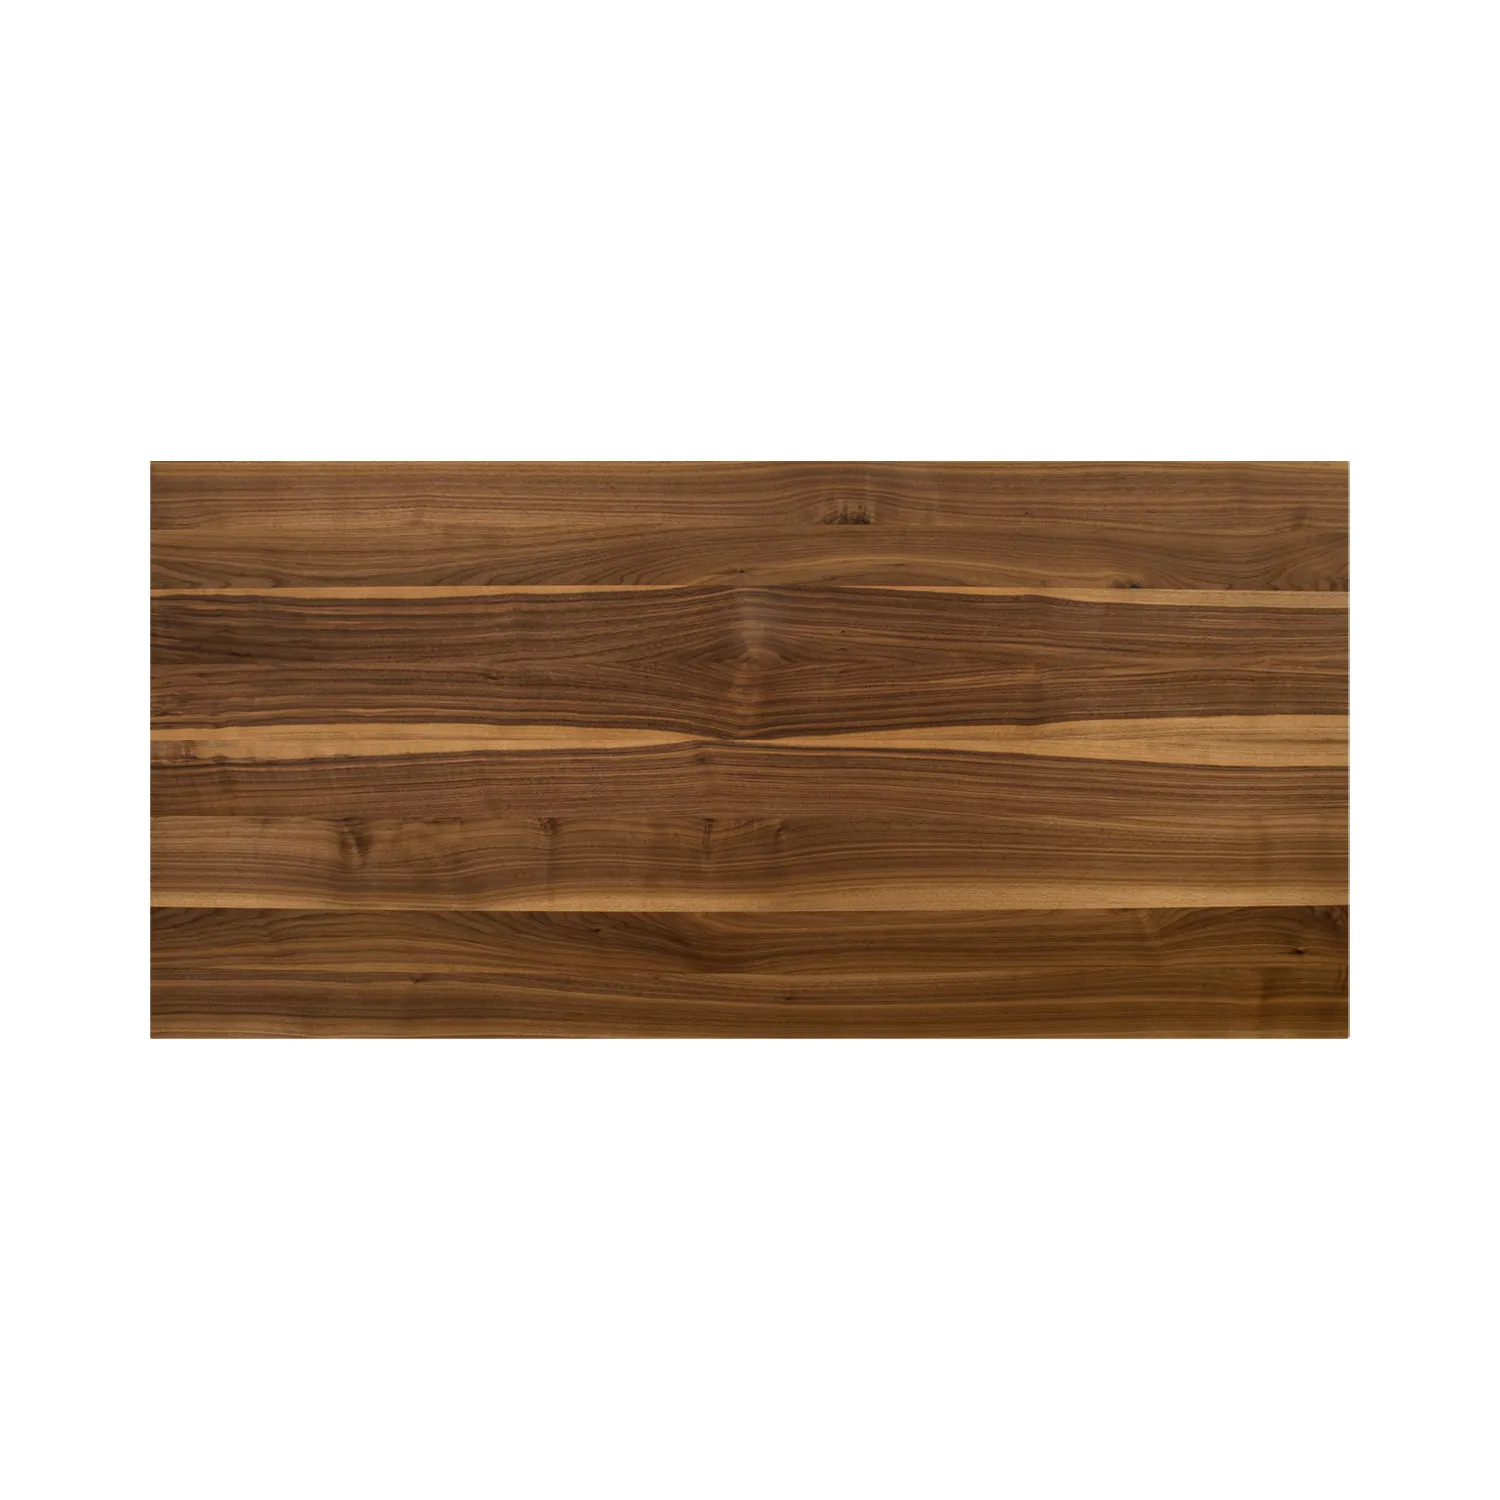 Oberfläche der massiven Tischplatte aus Massivholz